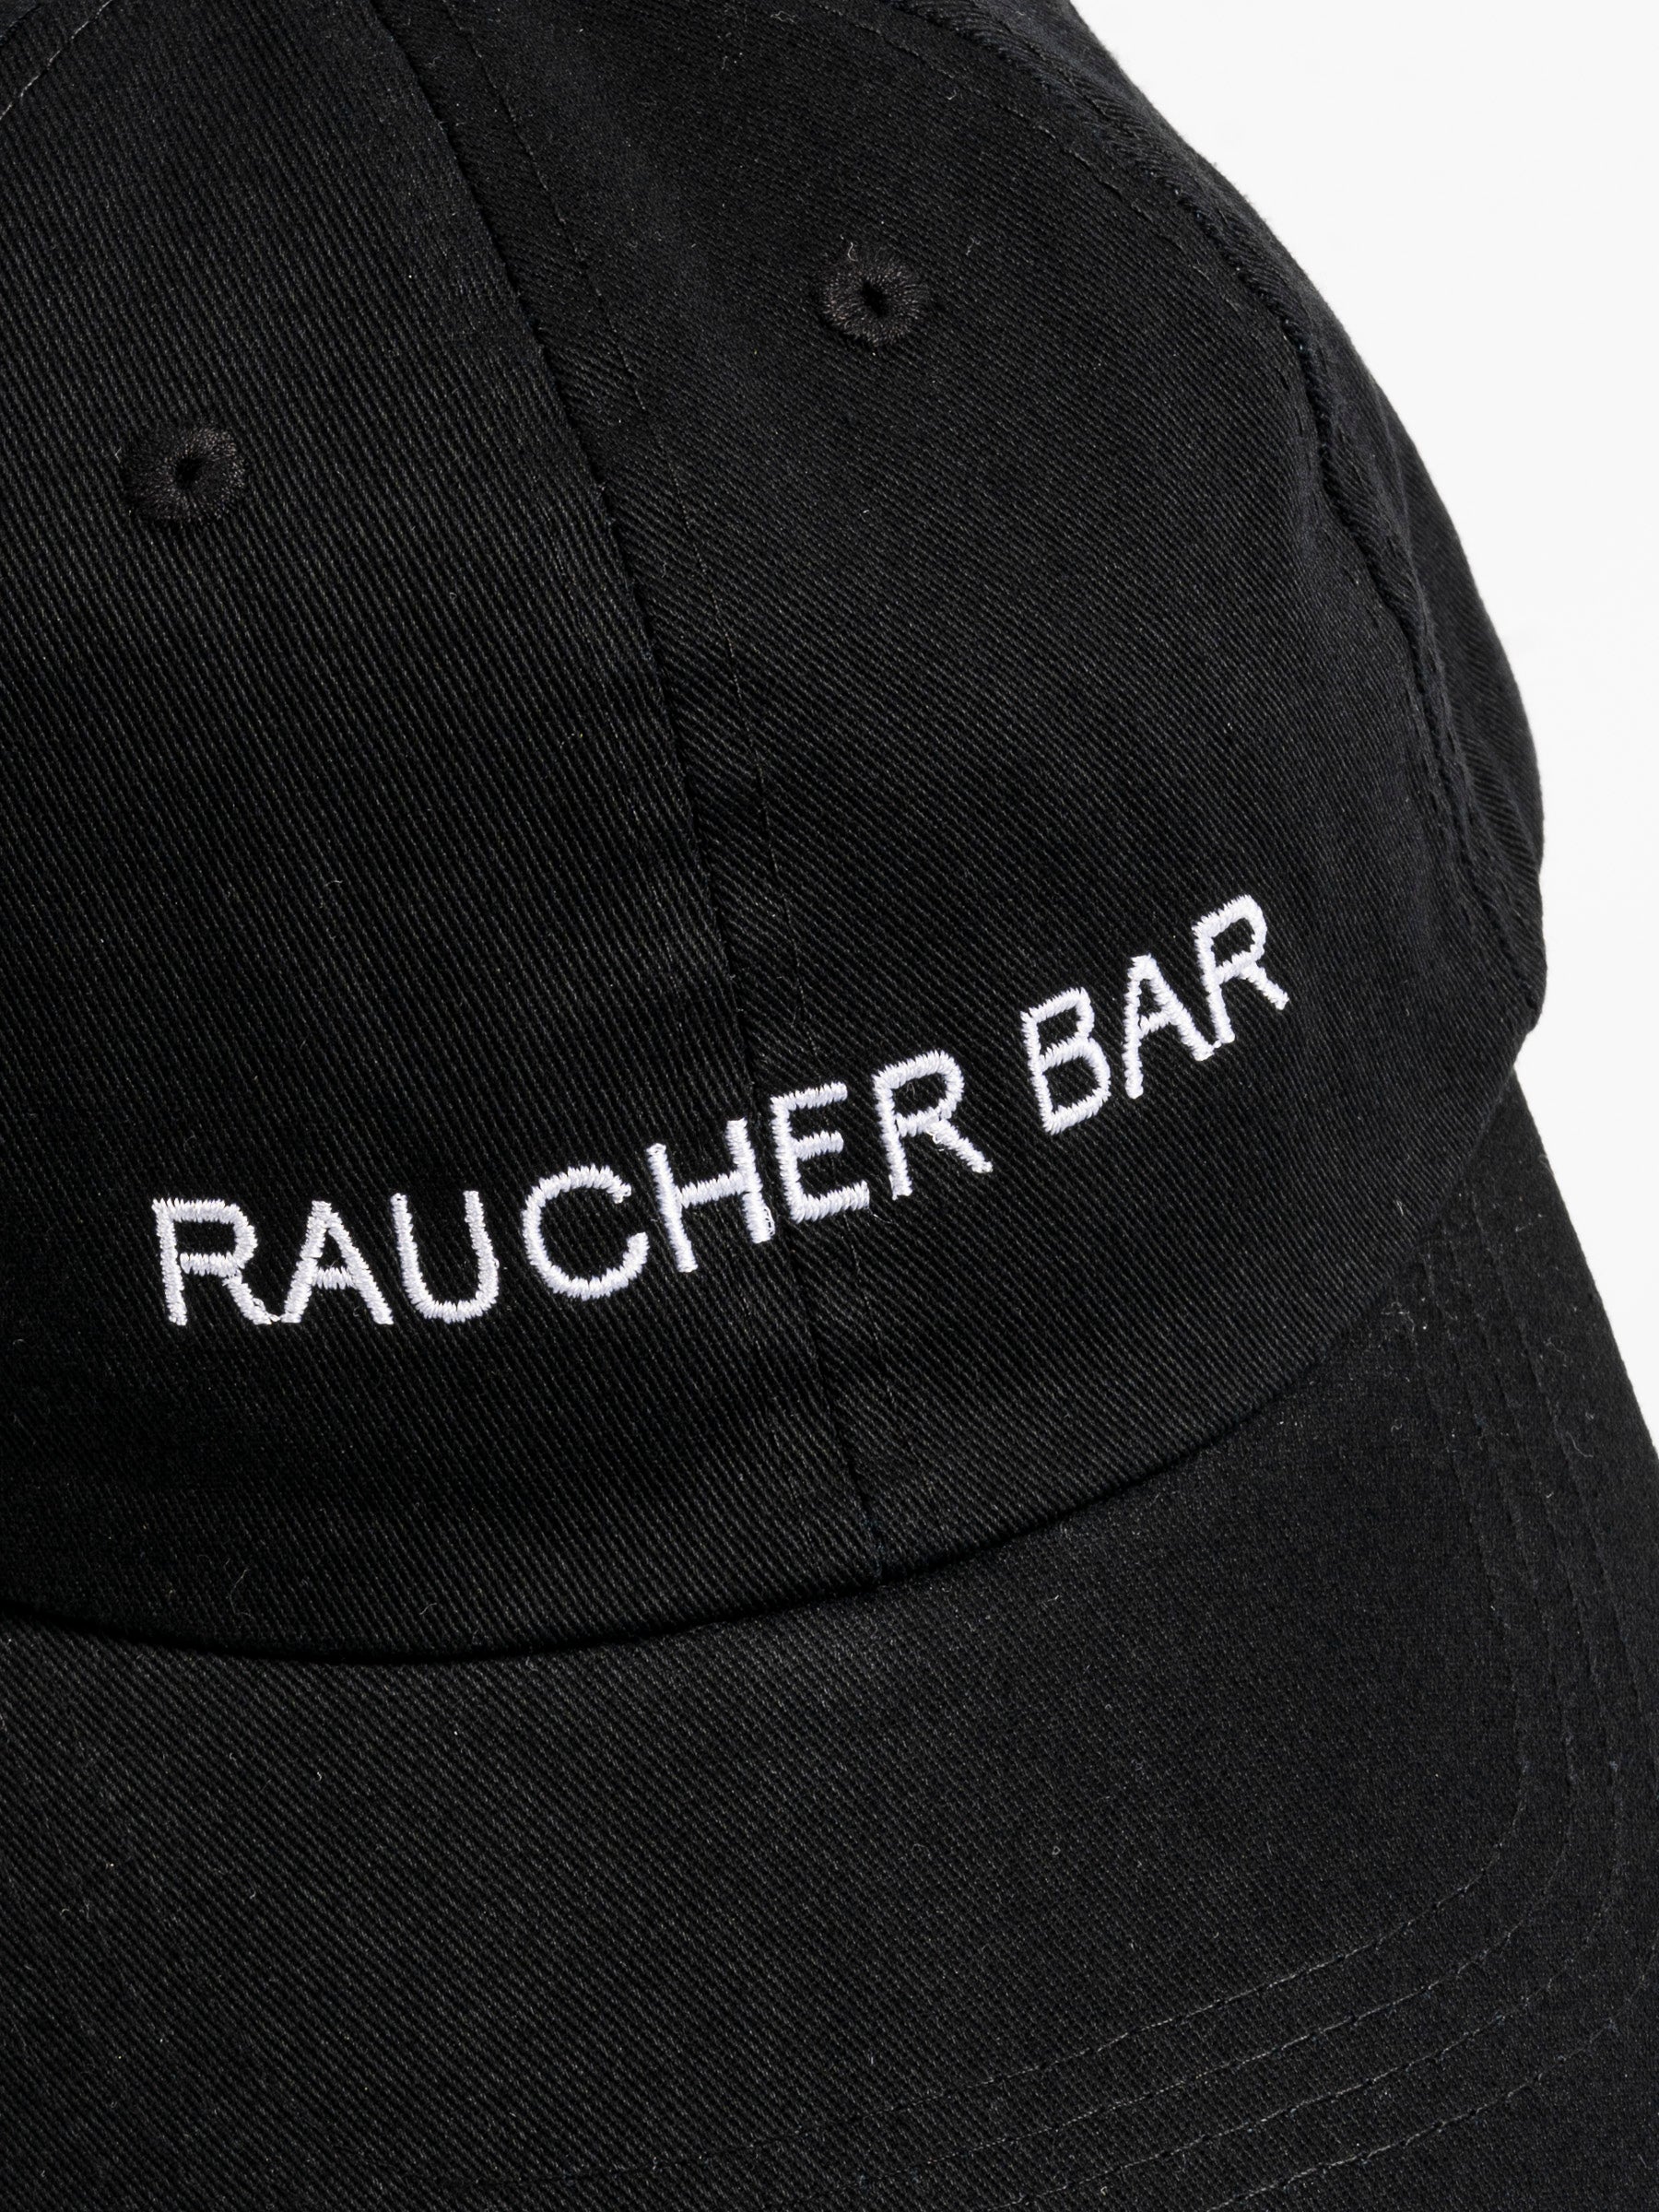 Raucher Bar Vintage Cap Black/White